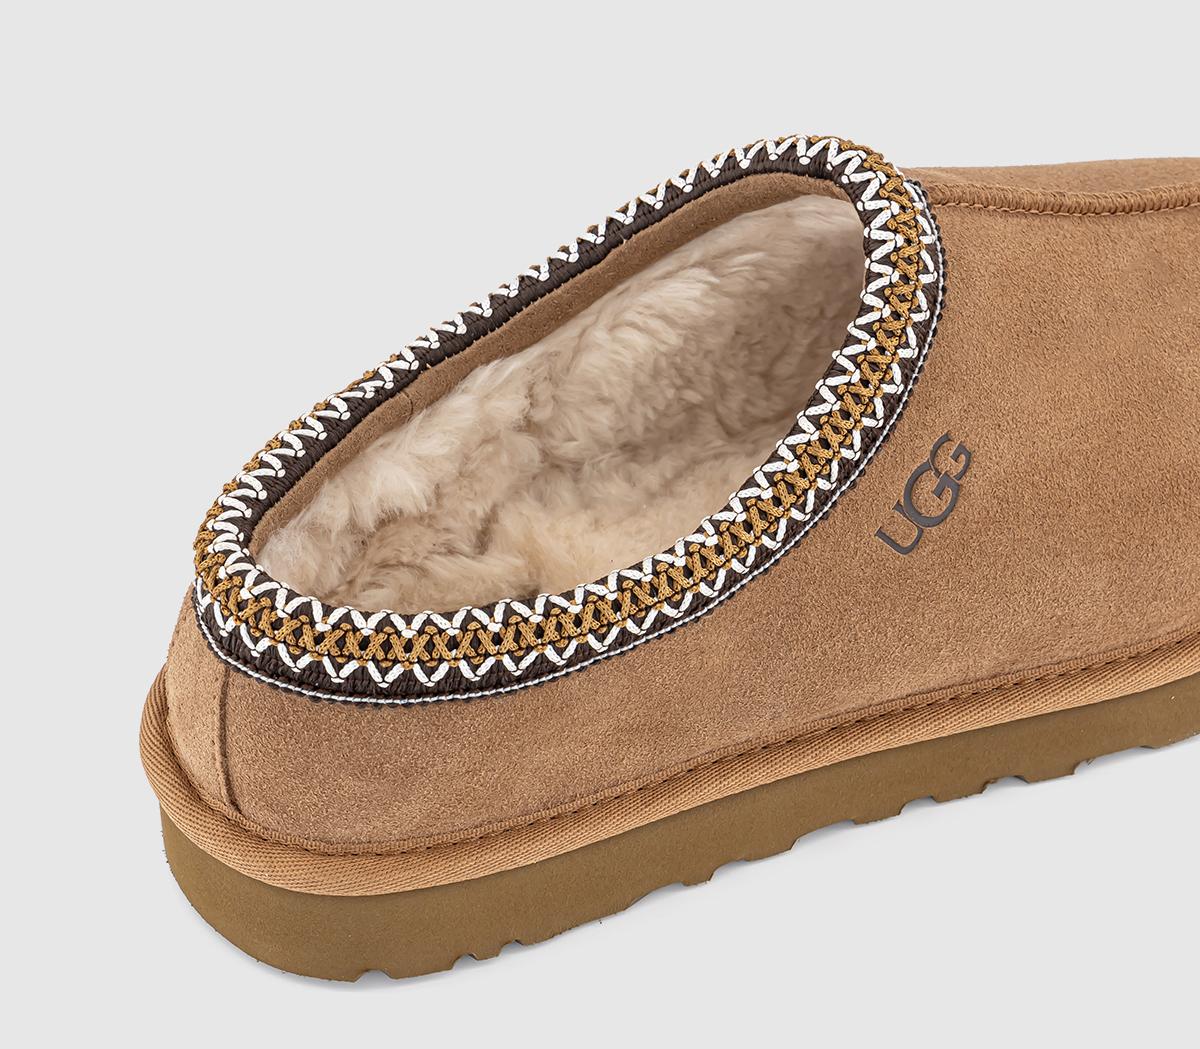 UGG Tasman Slippers M Chestnut - Men's Casual Shoes